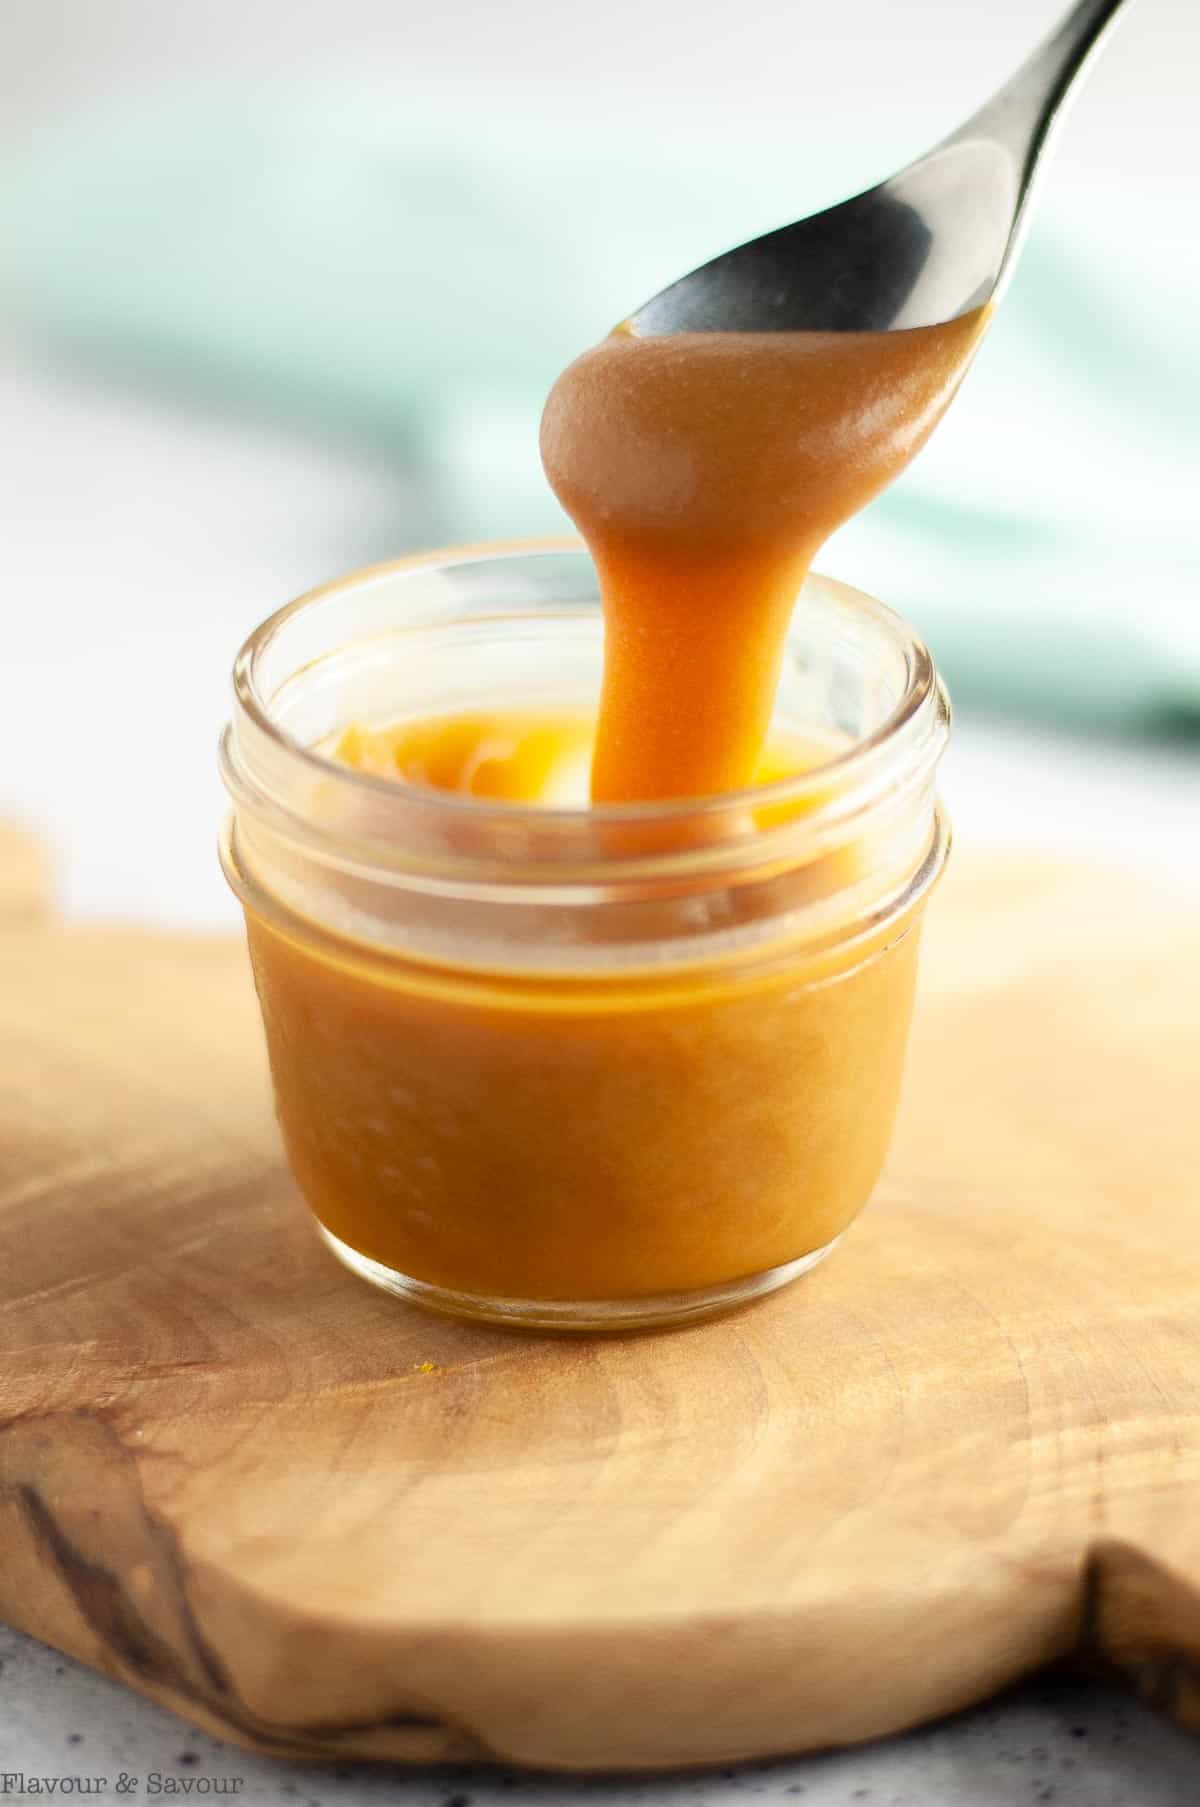 https://www.flavourandsavour.com/wp-content/uploads/2021/10/salted-caramel-sauce.jpg